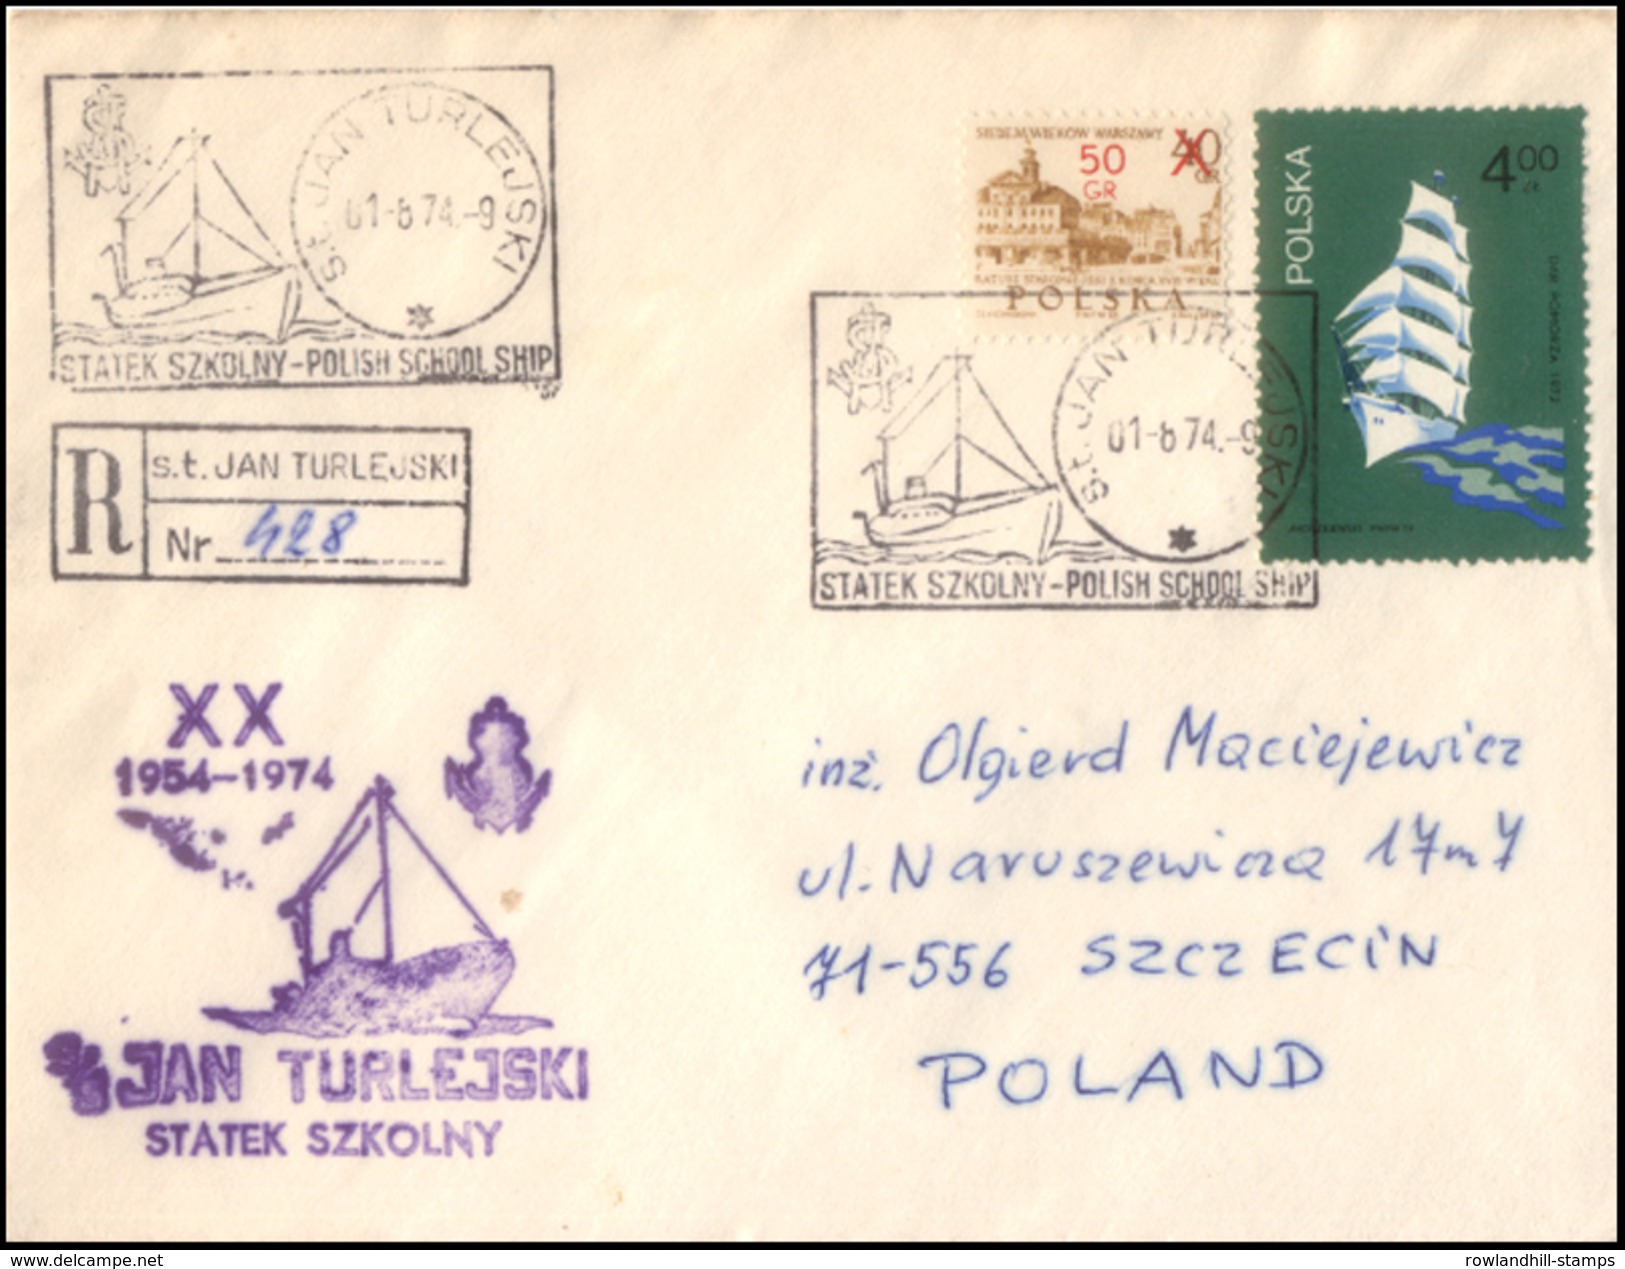 Poland, Polska, 1974, Jan Turlejski Statek Szkolny, Polish School Ship, Sailing Ships, Transport, Ship, Expeditions. - Expediciones árticas